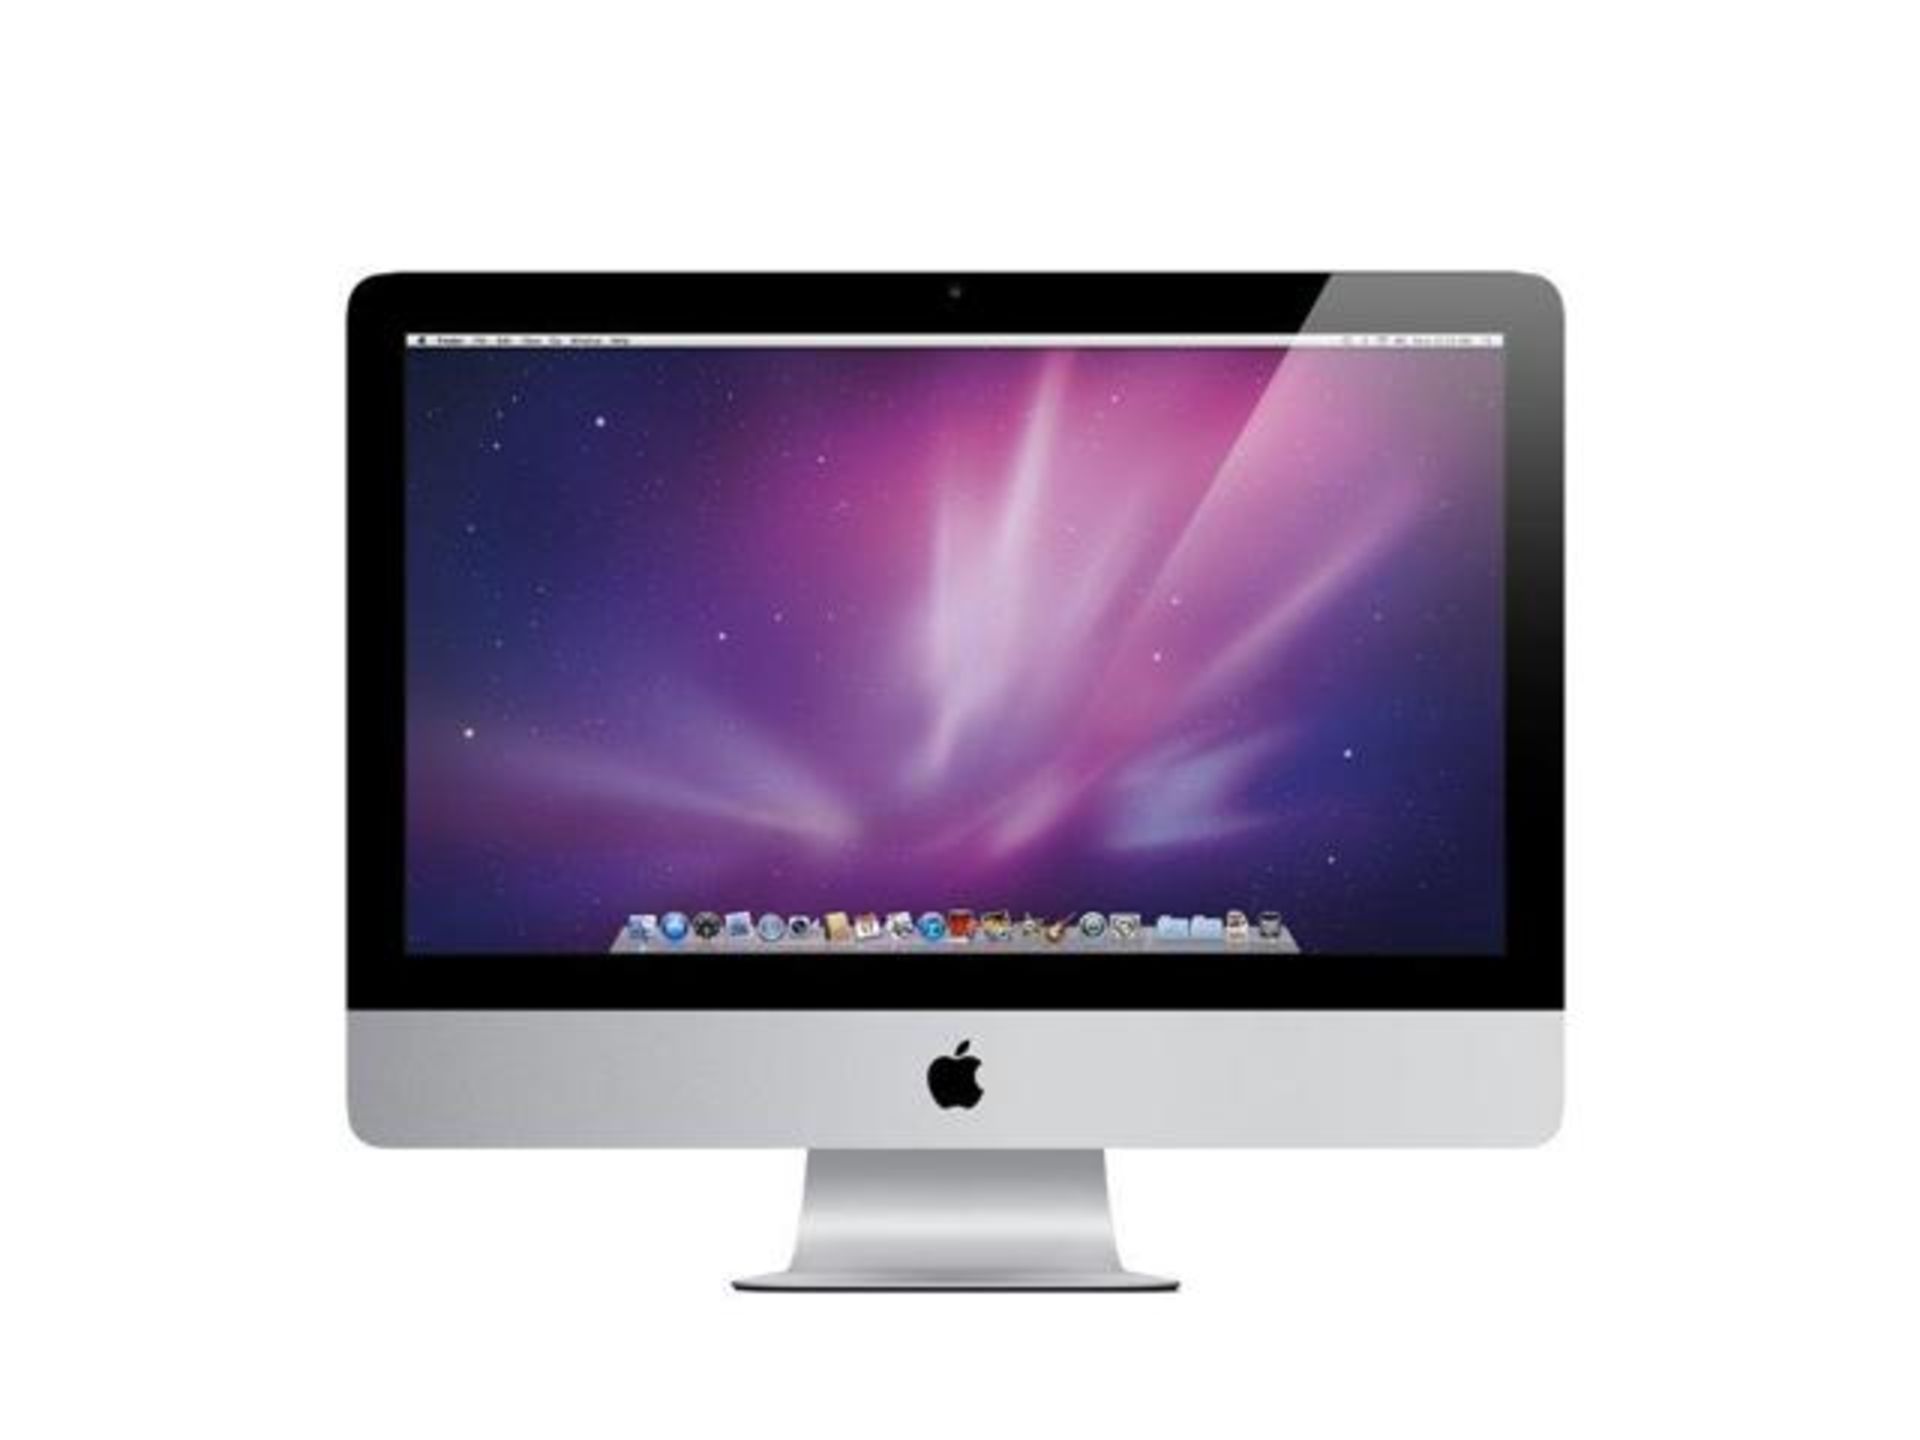 V Grade A Apple iMac All in One A1224 20" Desktop - Core 2 Duo 2GHz Processor - 4GB Ram - 160GB Hard